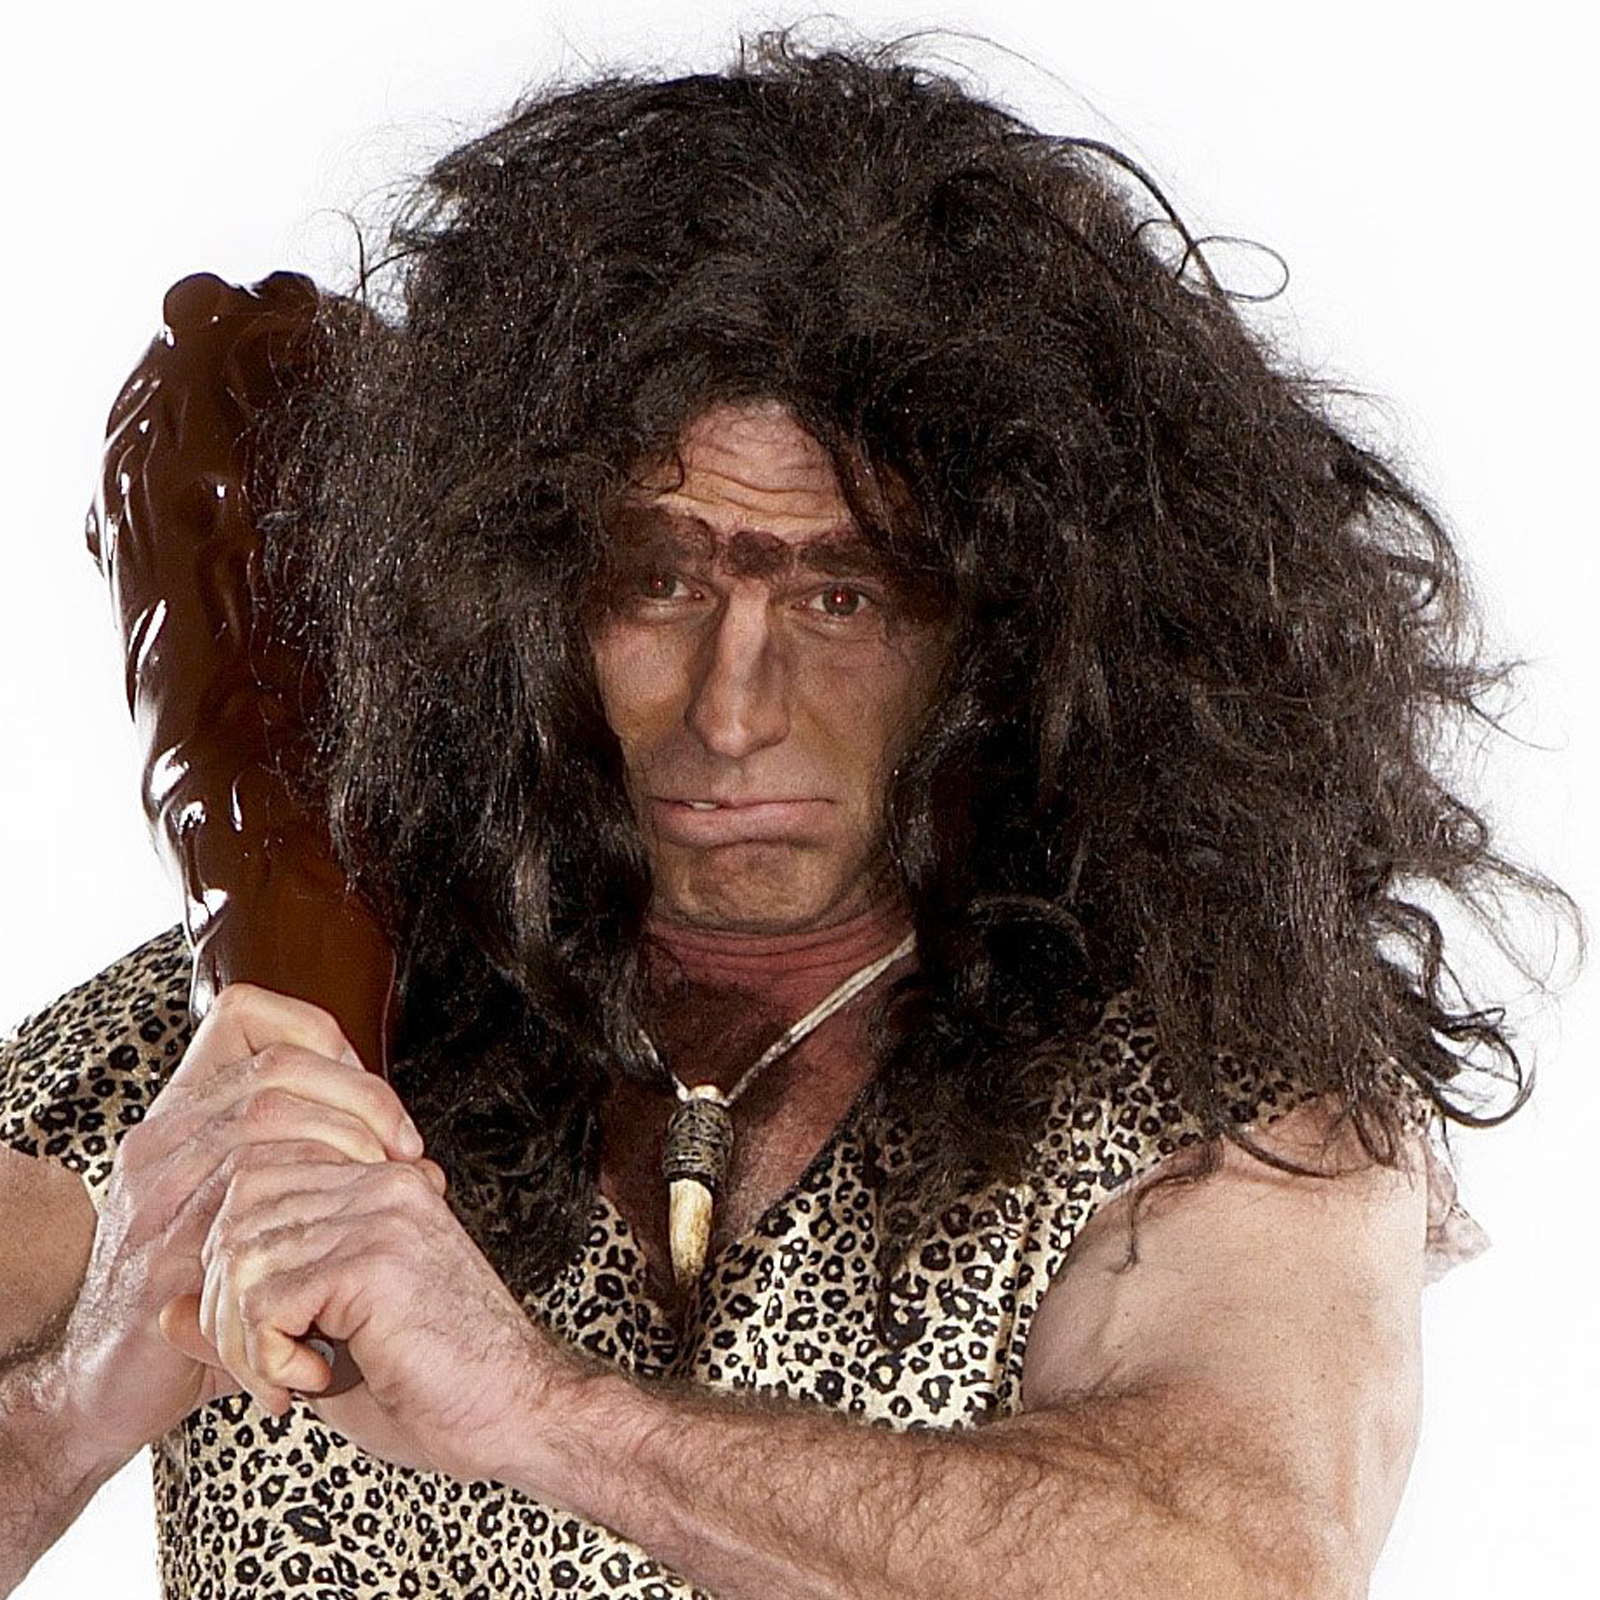 AMC Women's Caveman Wig - Adult